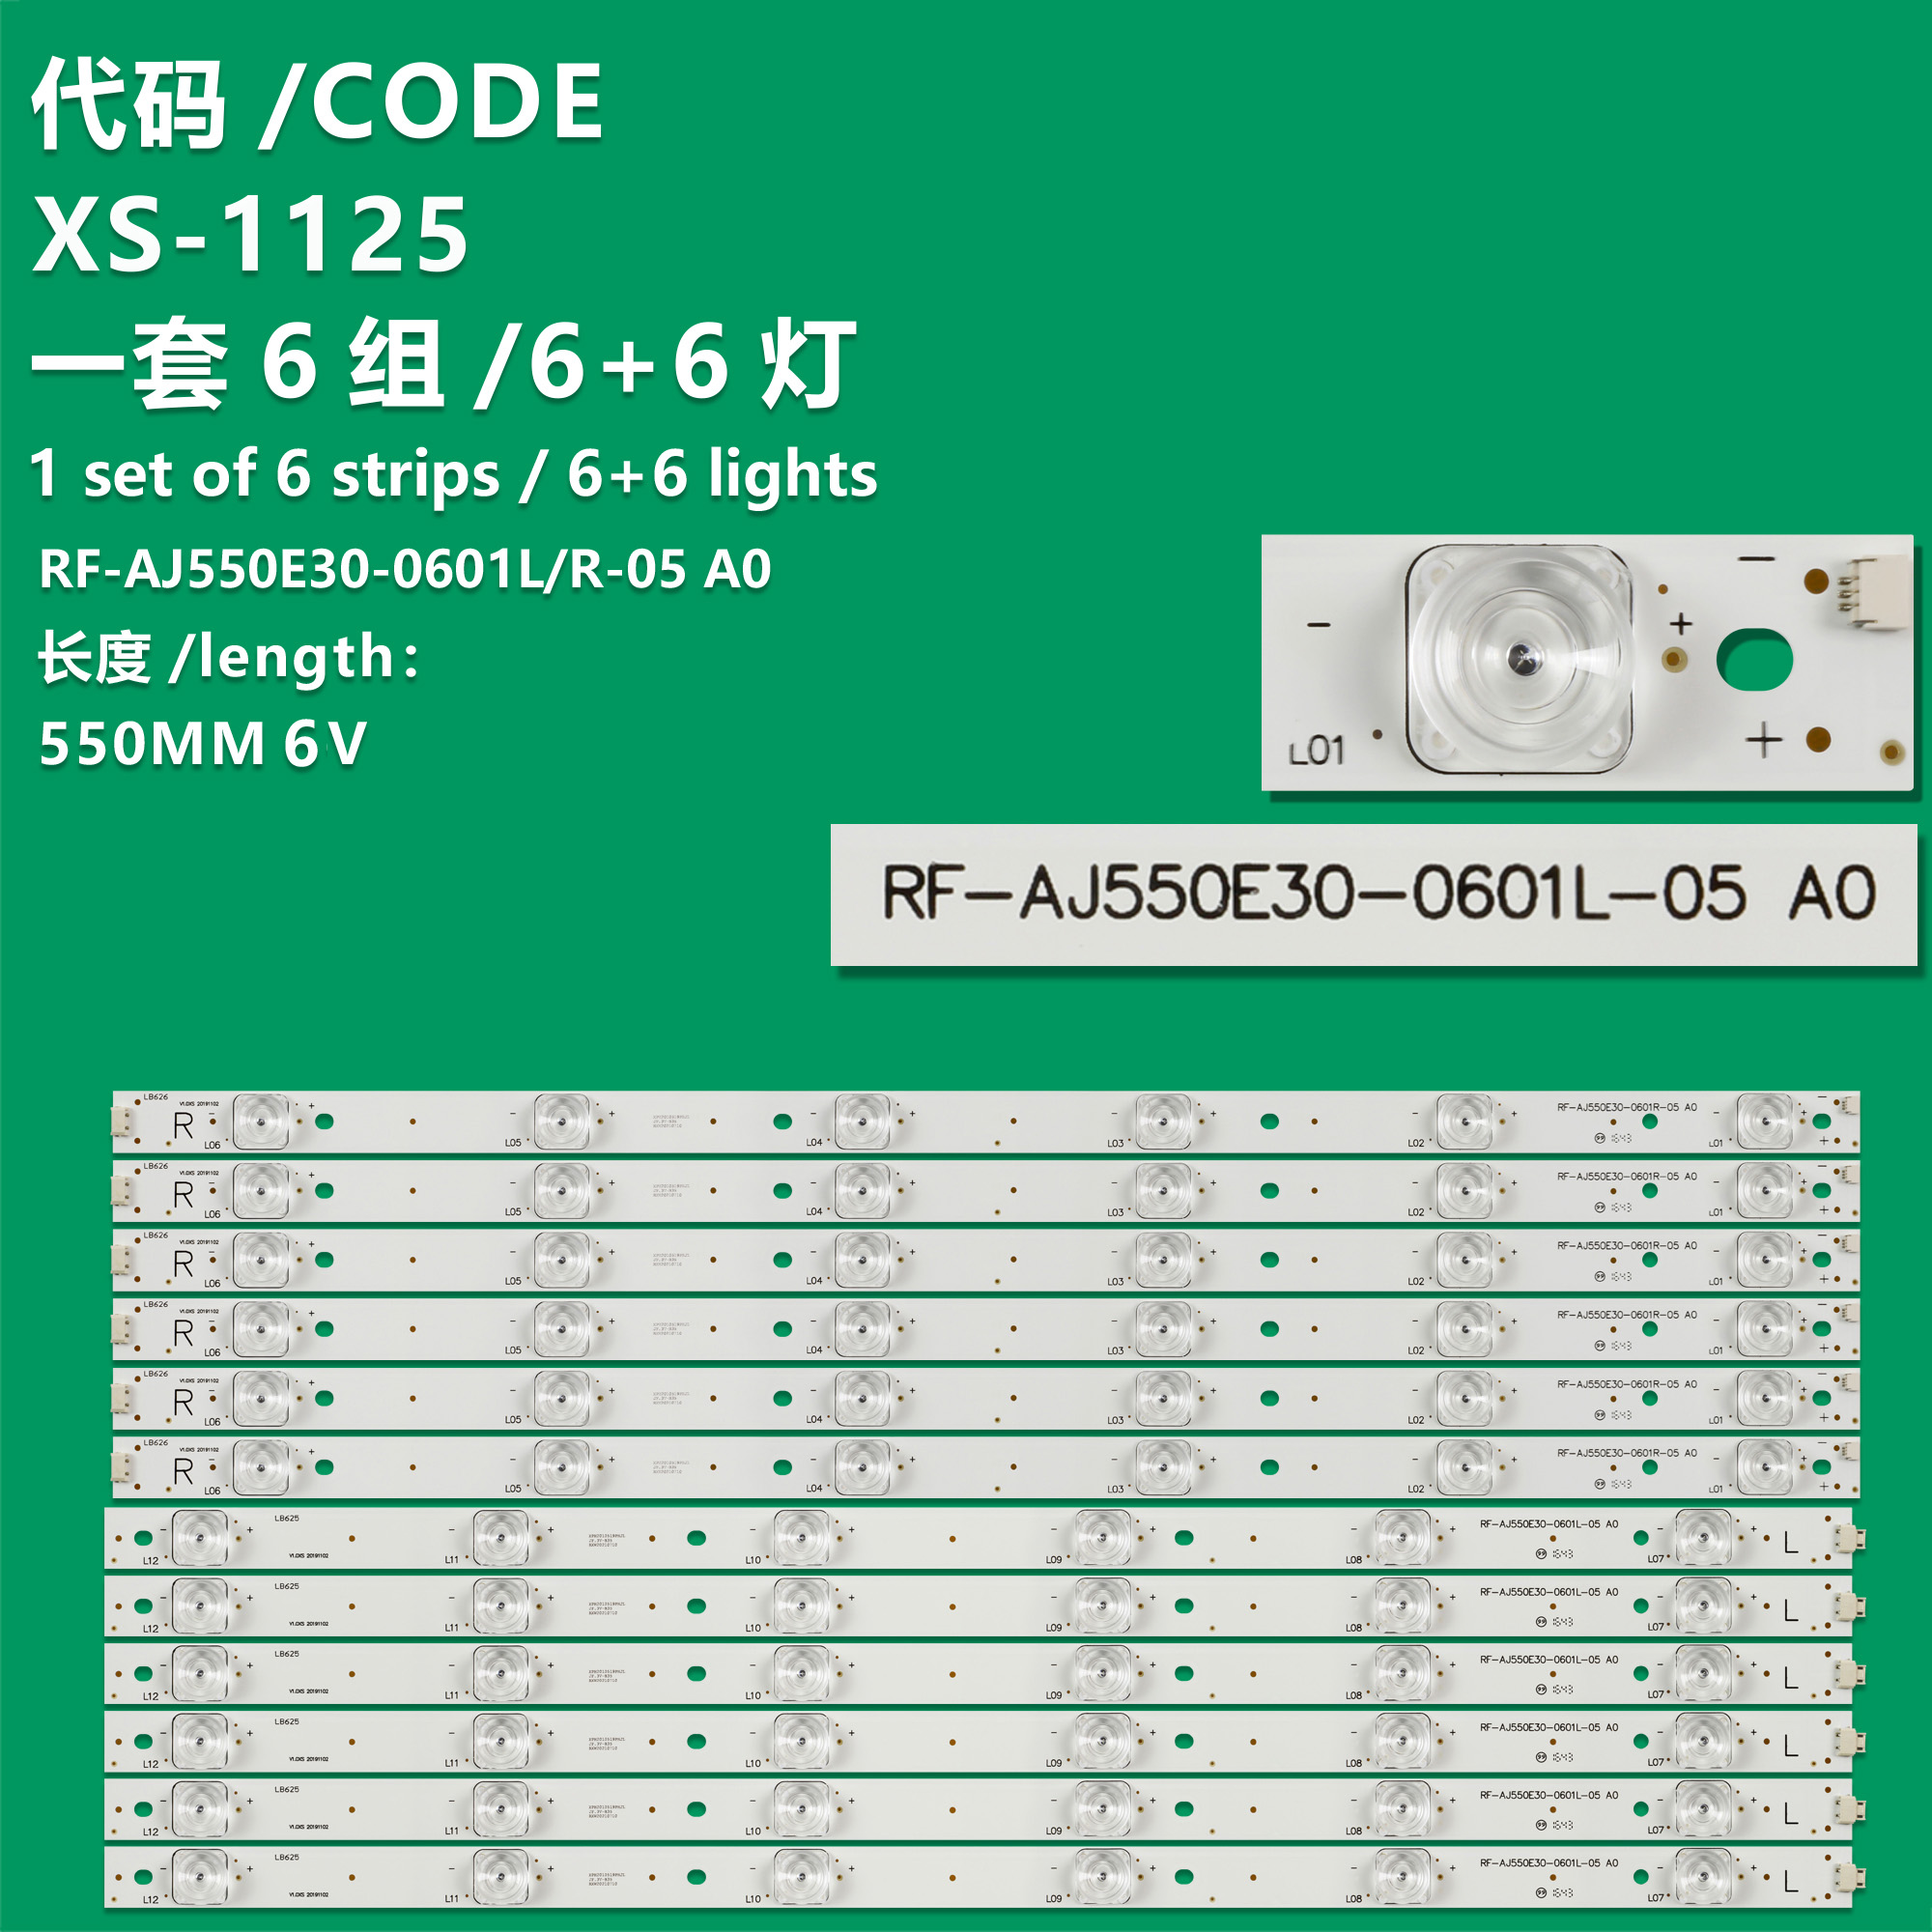 XS-1125 New LCD TV Backlight Strip RF-AJ550E30-0601L-05 A0, RF-AJ550E30-0601R-05 A0 For Sharp LC-55CUF8472, LC-55CUF8472ES, LC-55CUF8472KS, LC-55CUG8052E